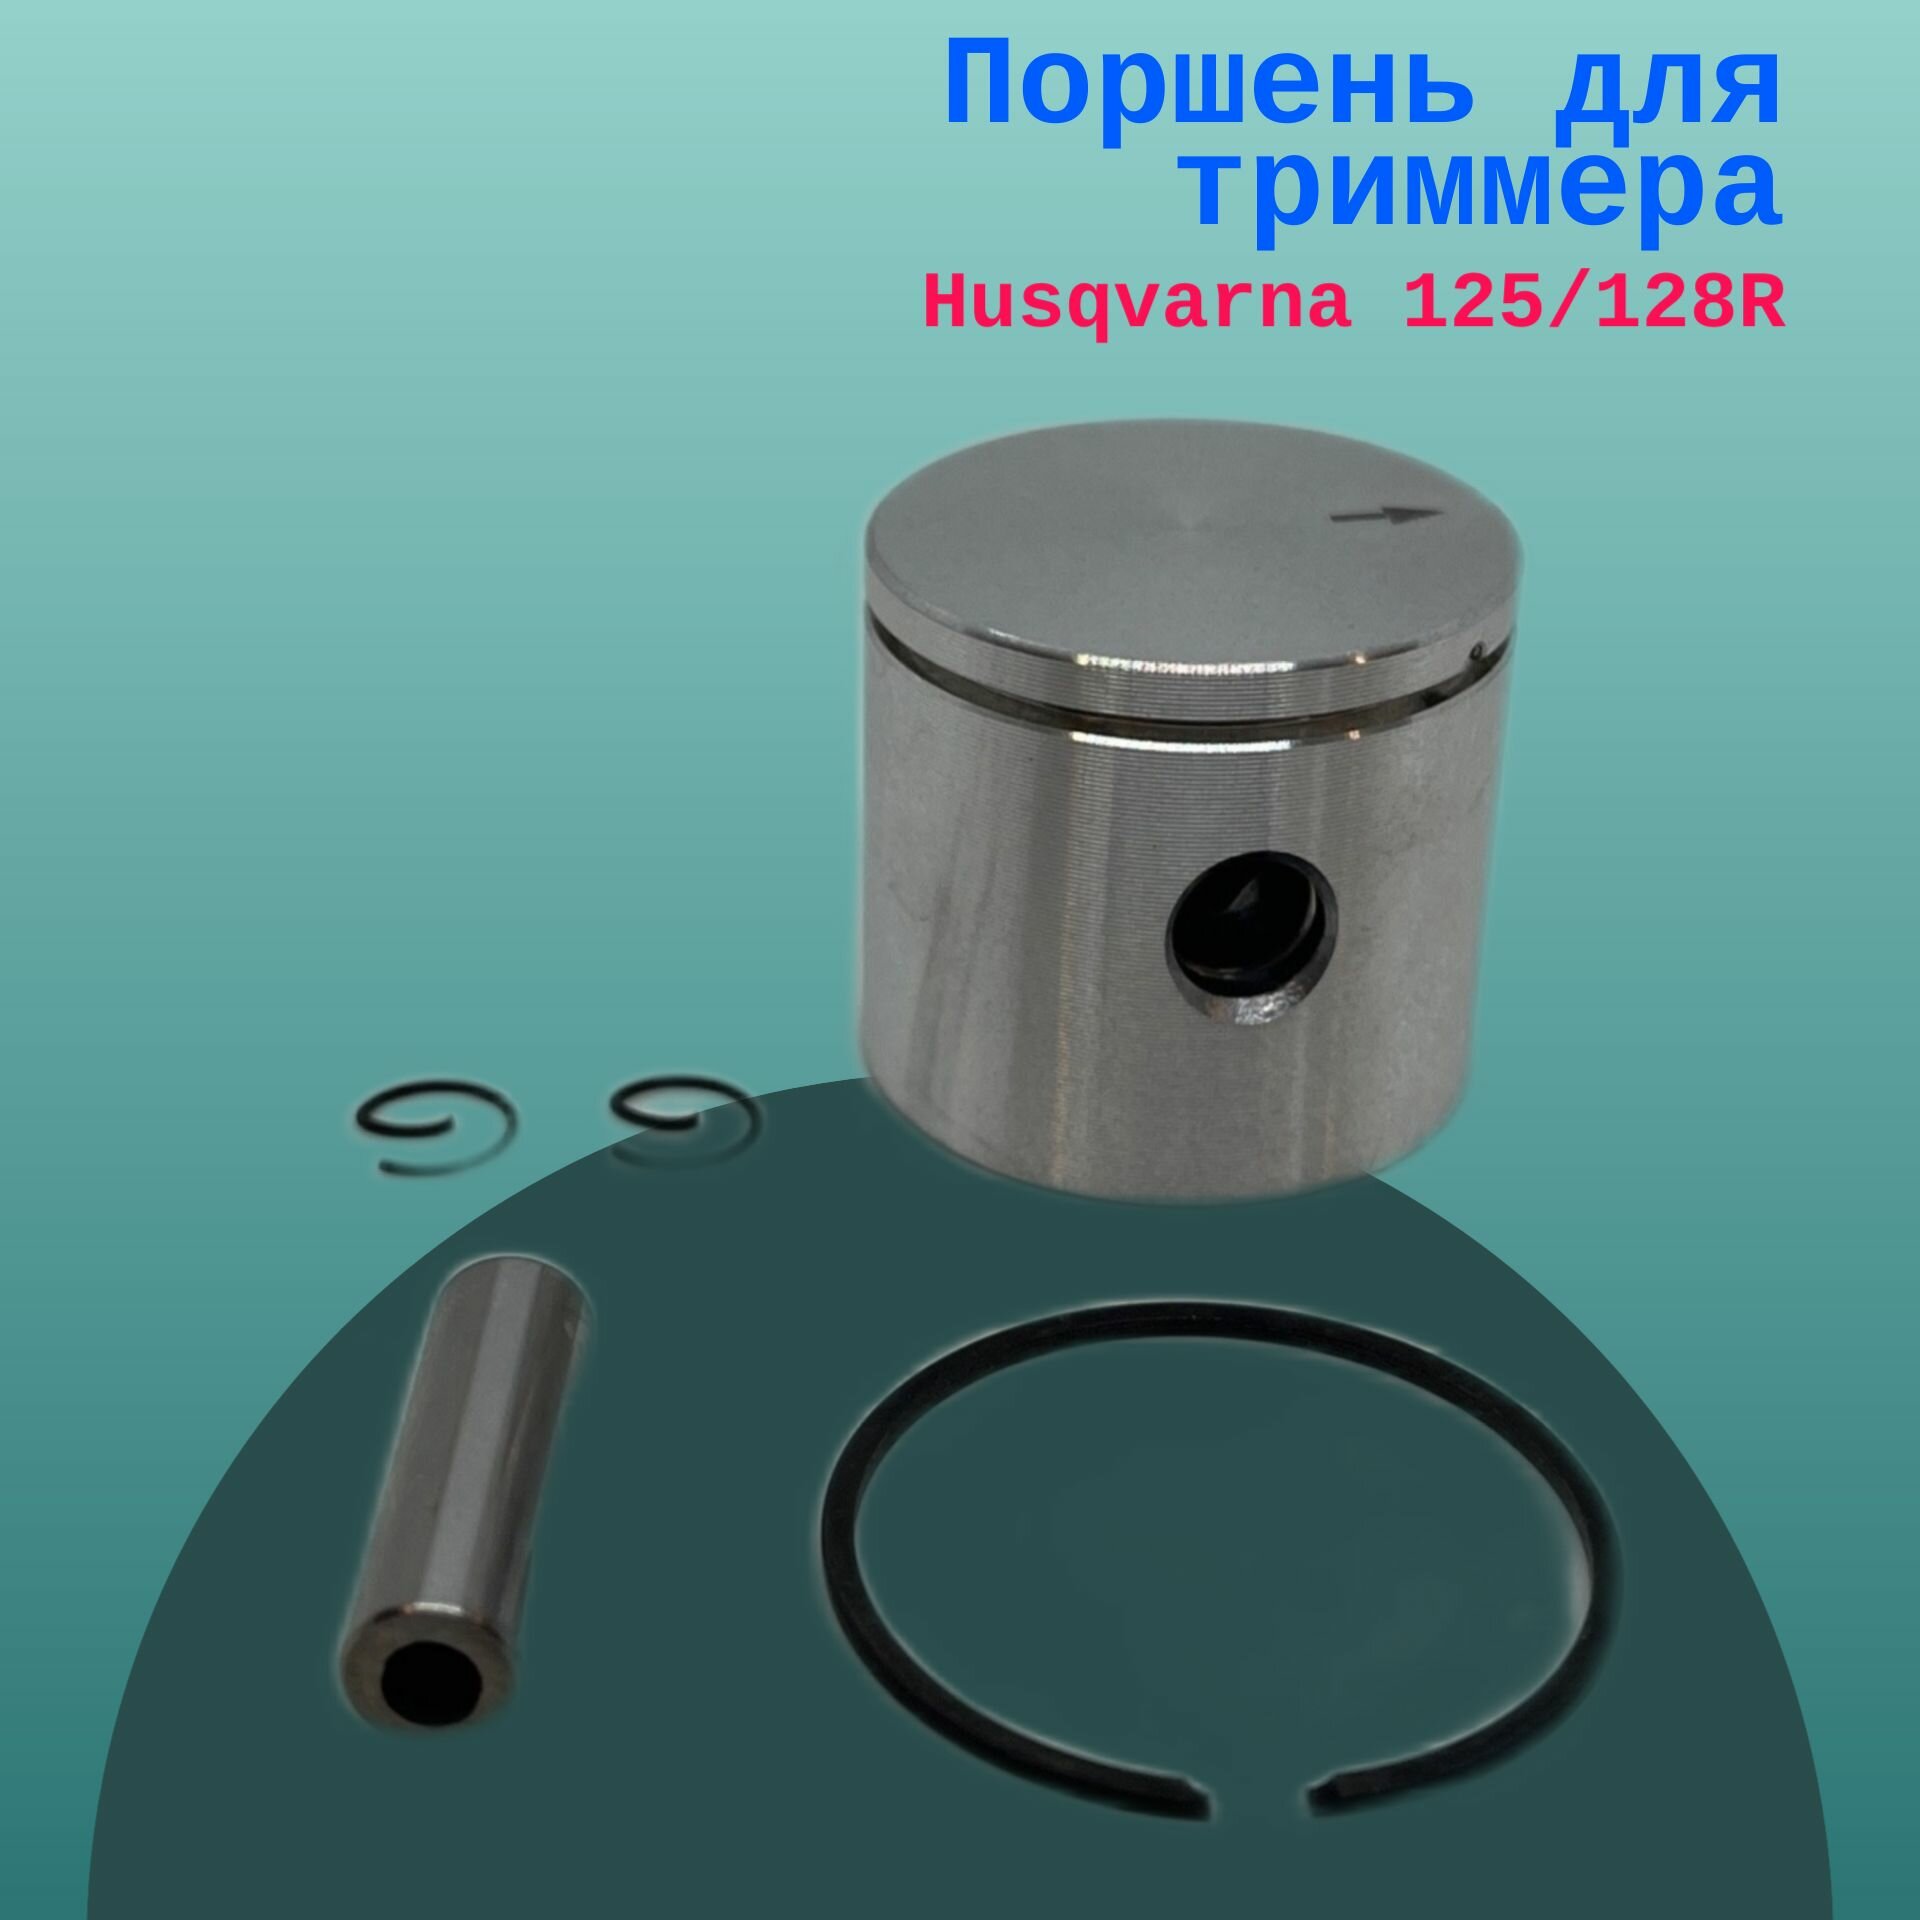 Поршень для триммера Husqvarna 125/128R